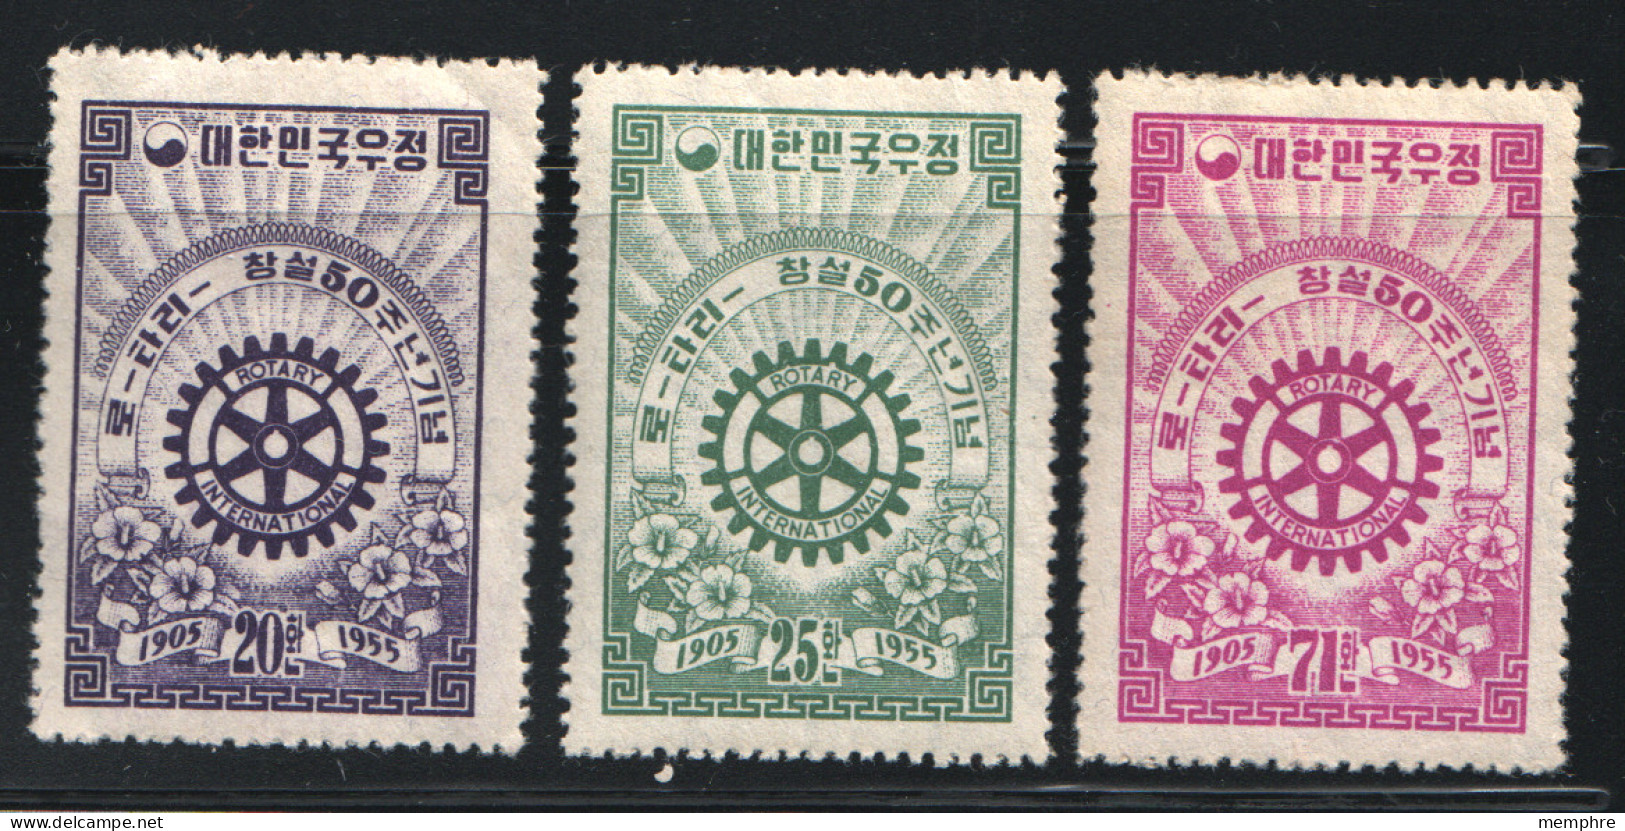 South Korea  1955  Rotary International  Sc 213-5  ** - Corée Du Sud